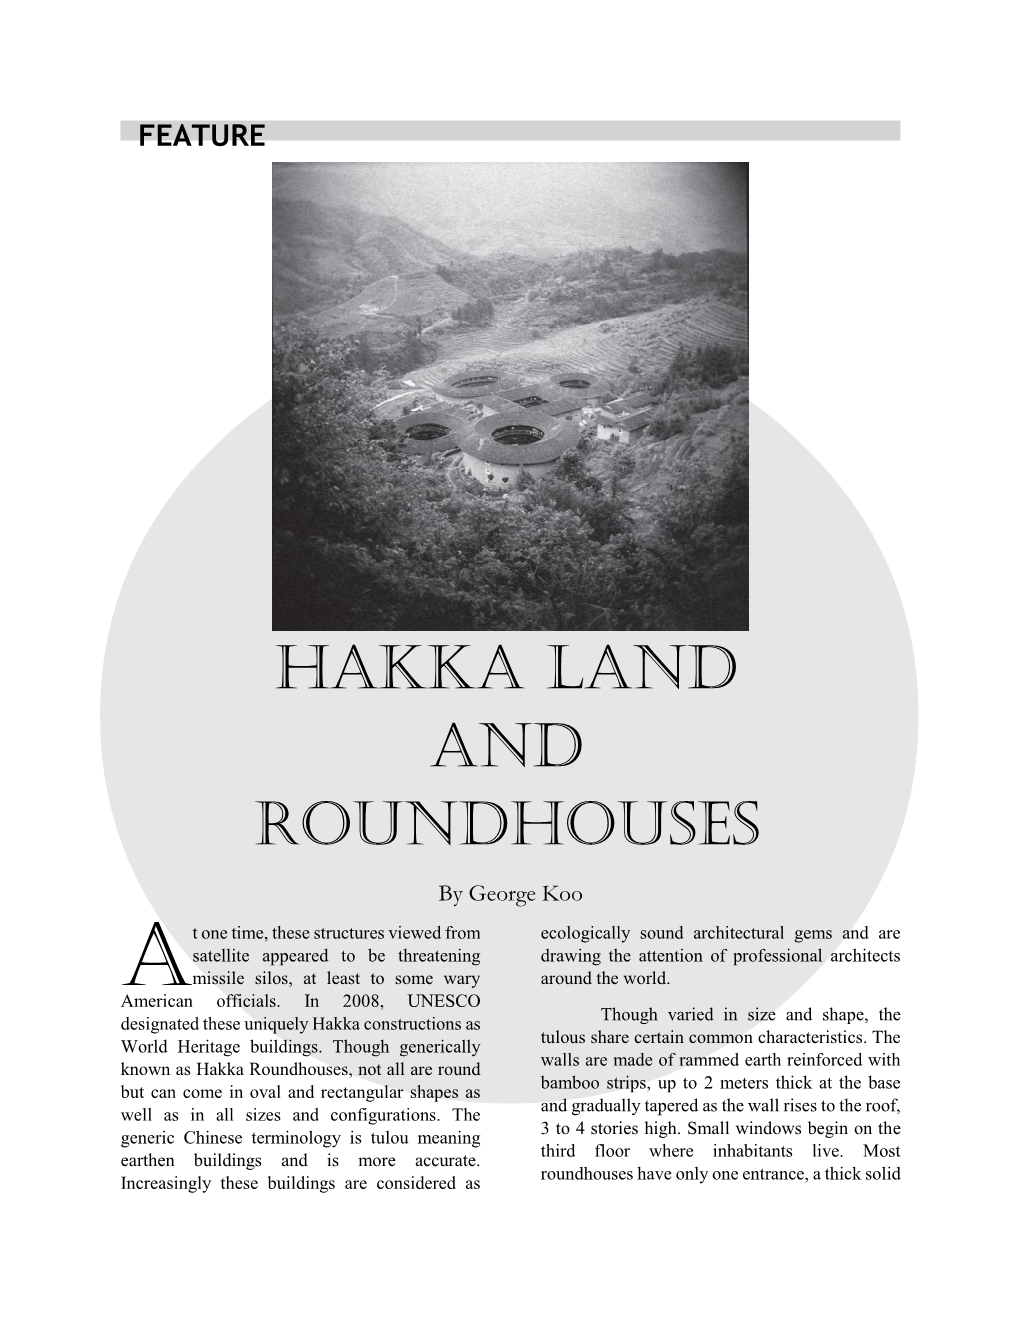 Hakka Land and Roundhouses